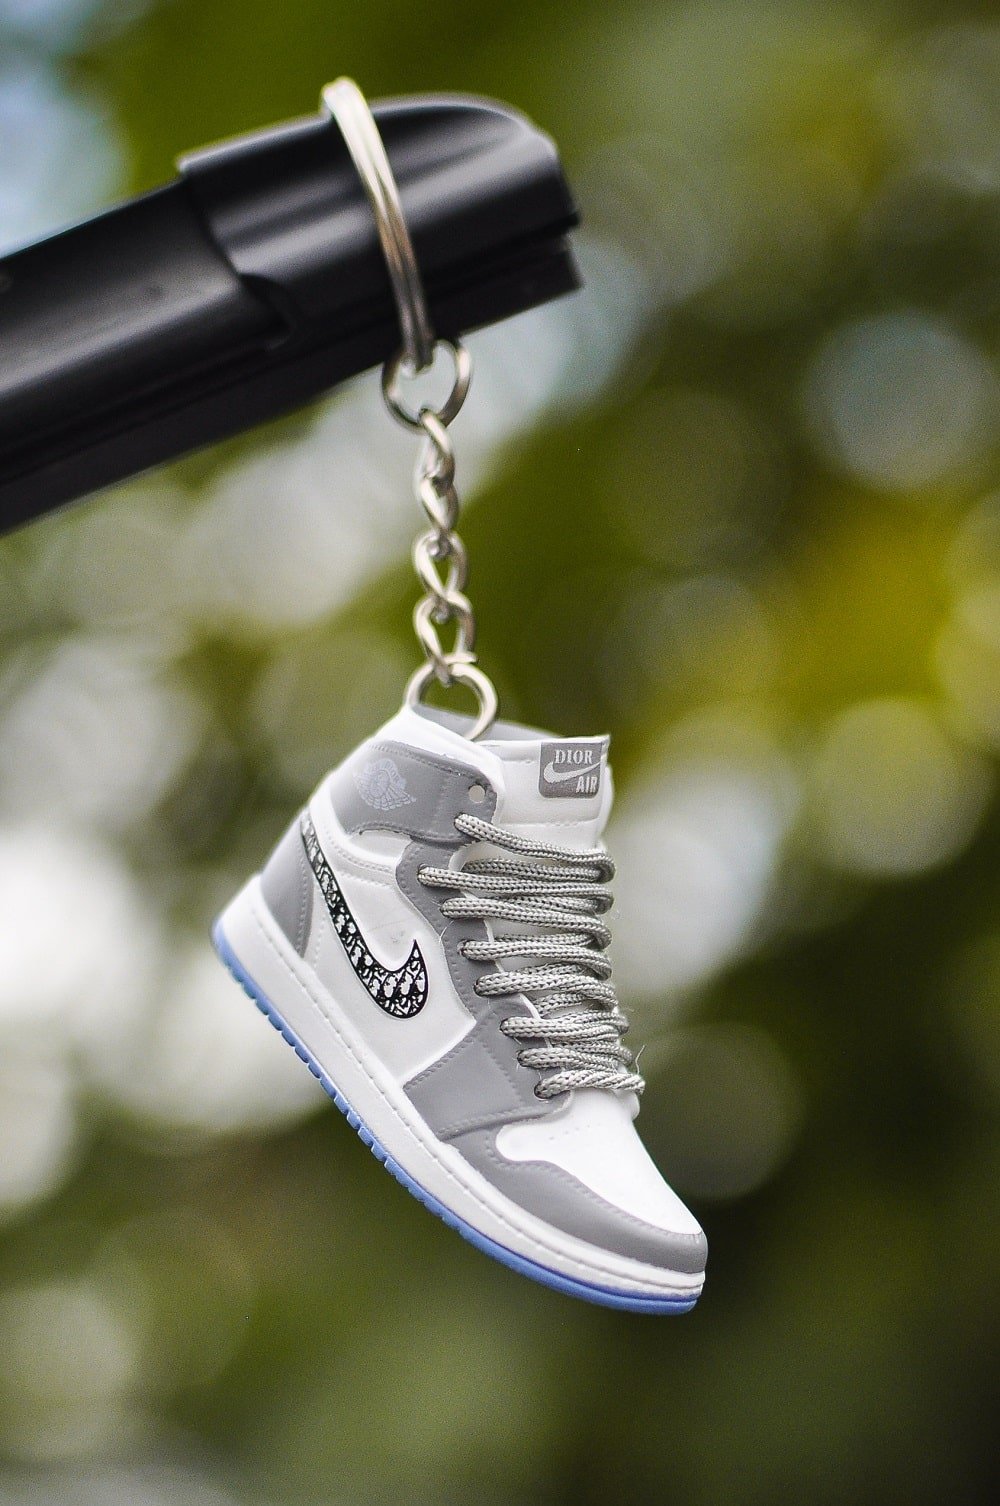 Air Jordan Keyring - Mini Nike Sneaker 3D Keychain + box